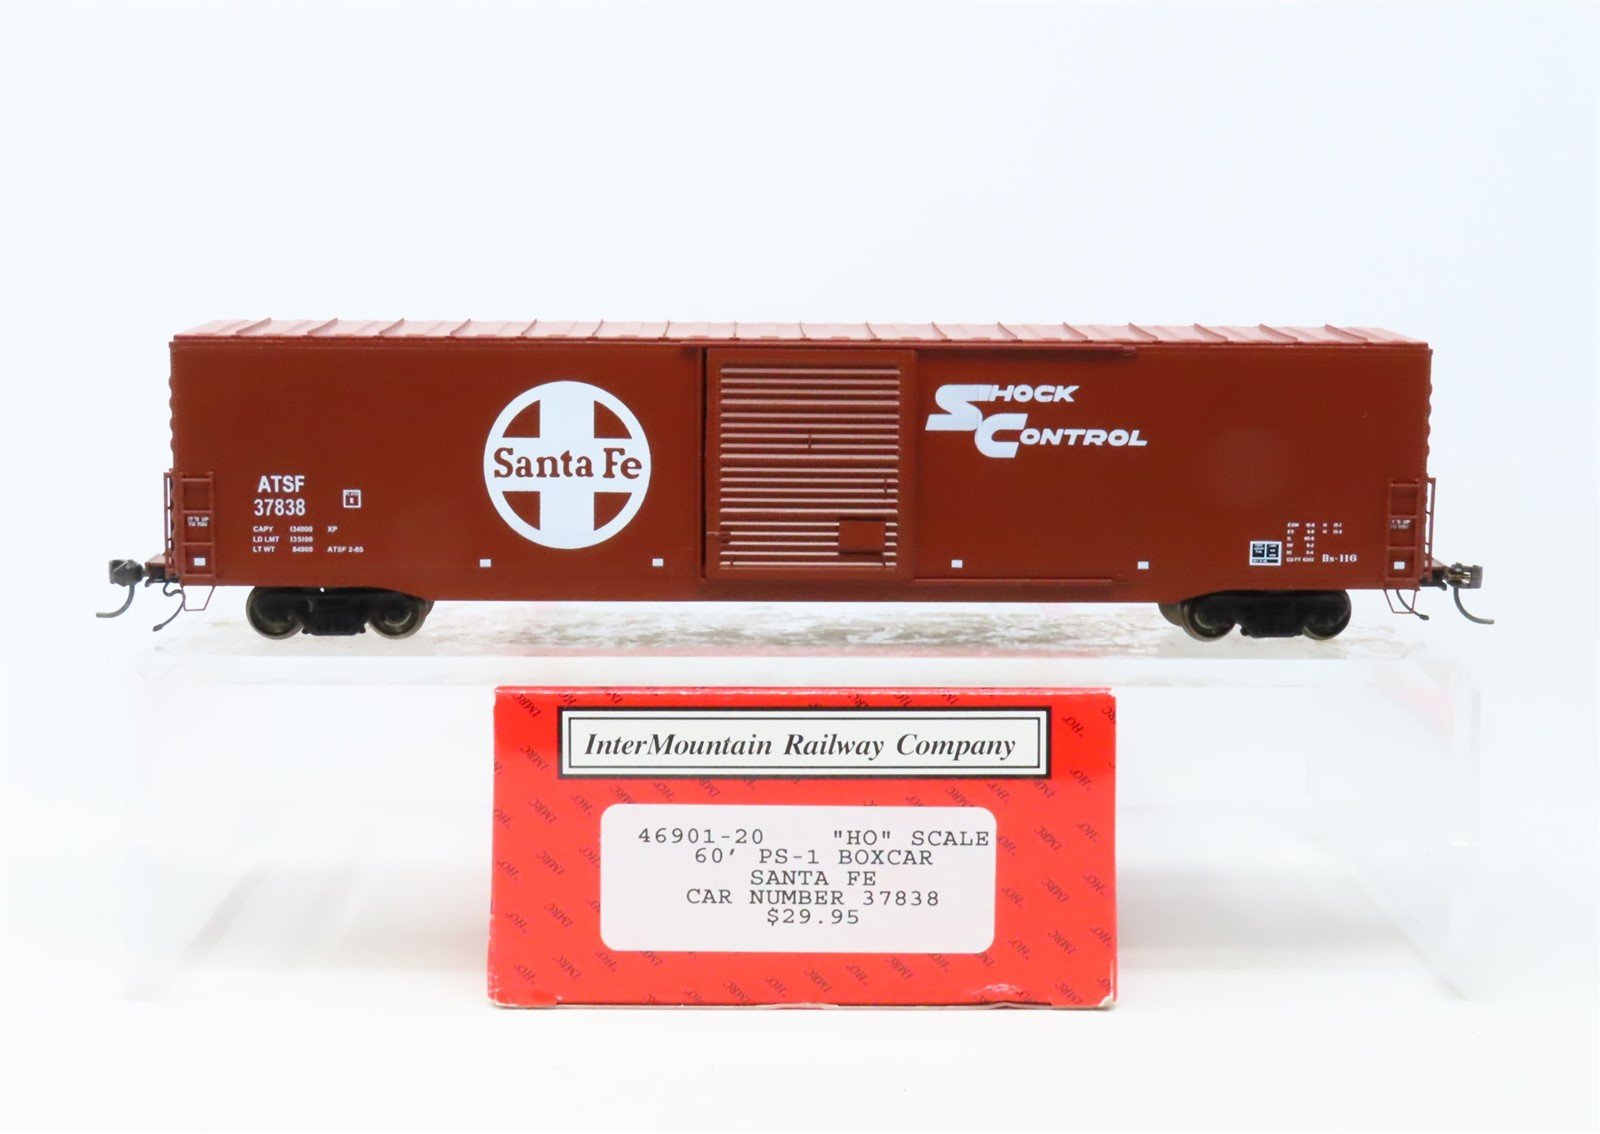 HO Scale InterMountain 46901-20 ATSF Santa Fe "Shock Control" Box Car #37838